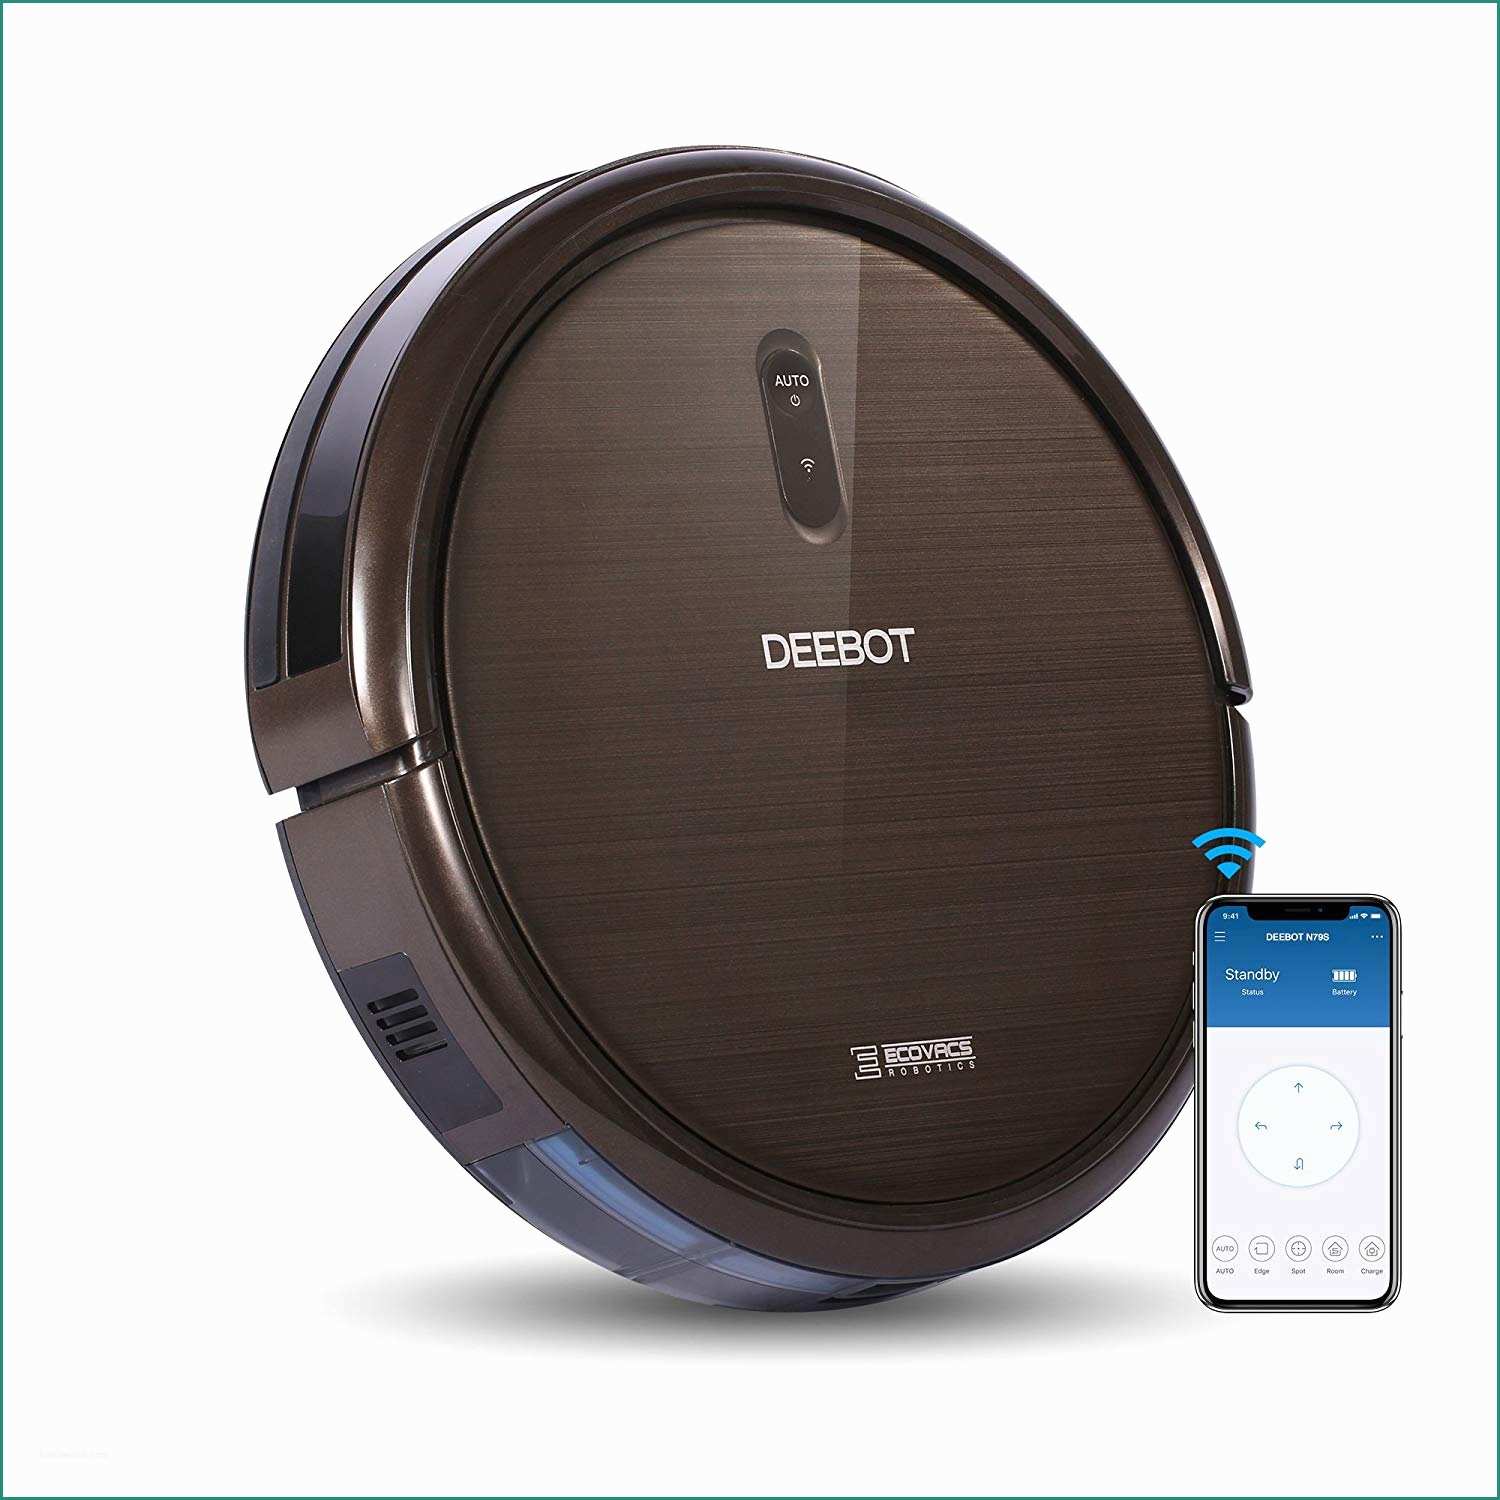 Roomba Prezzo E Amazon Ecovacs Deebot N79s Robot Vacuum Cleaner with Max Power